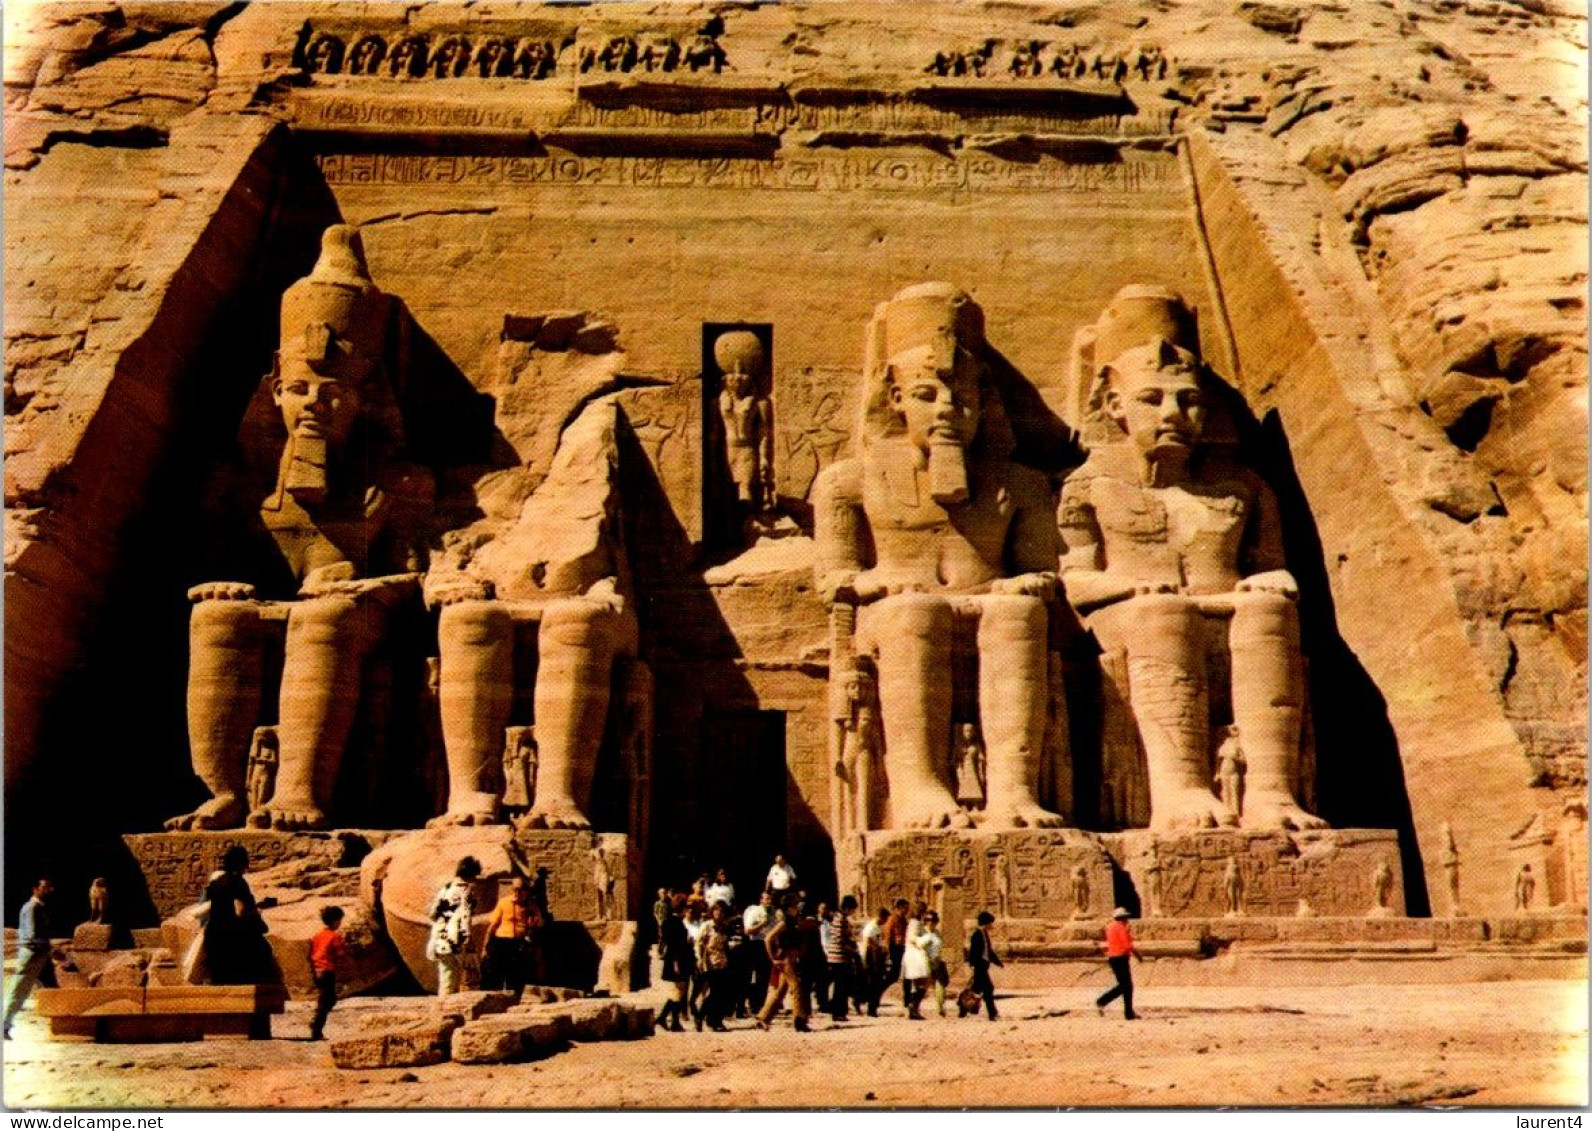 2-10-2023 (3 U 6) Egypt - Abu Simbel Temple - Tempel Von Abu Simbel